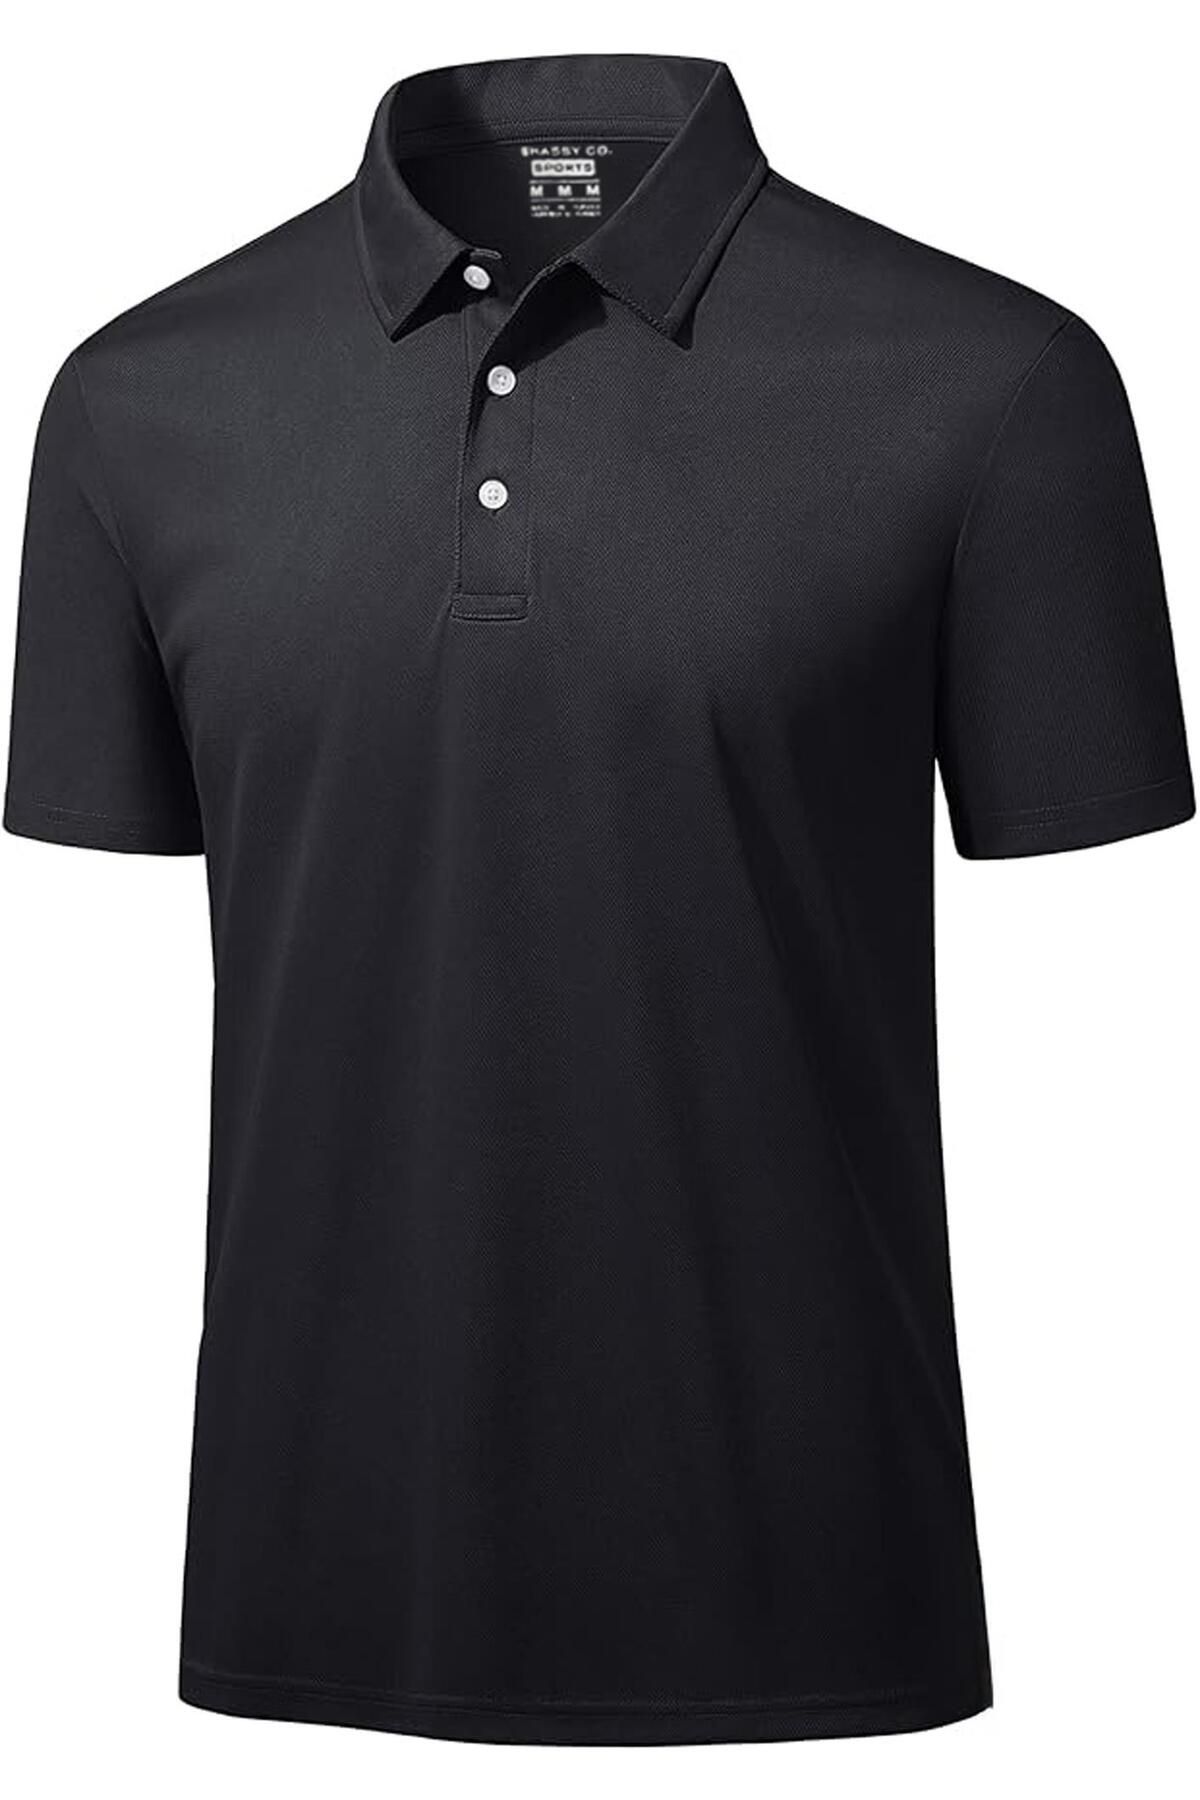 Ghassy Co Ghassy Co. Erkek Golf Dry Fit Classic Tenis Casual Polo Yaka T-Shirt